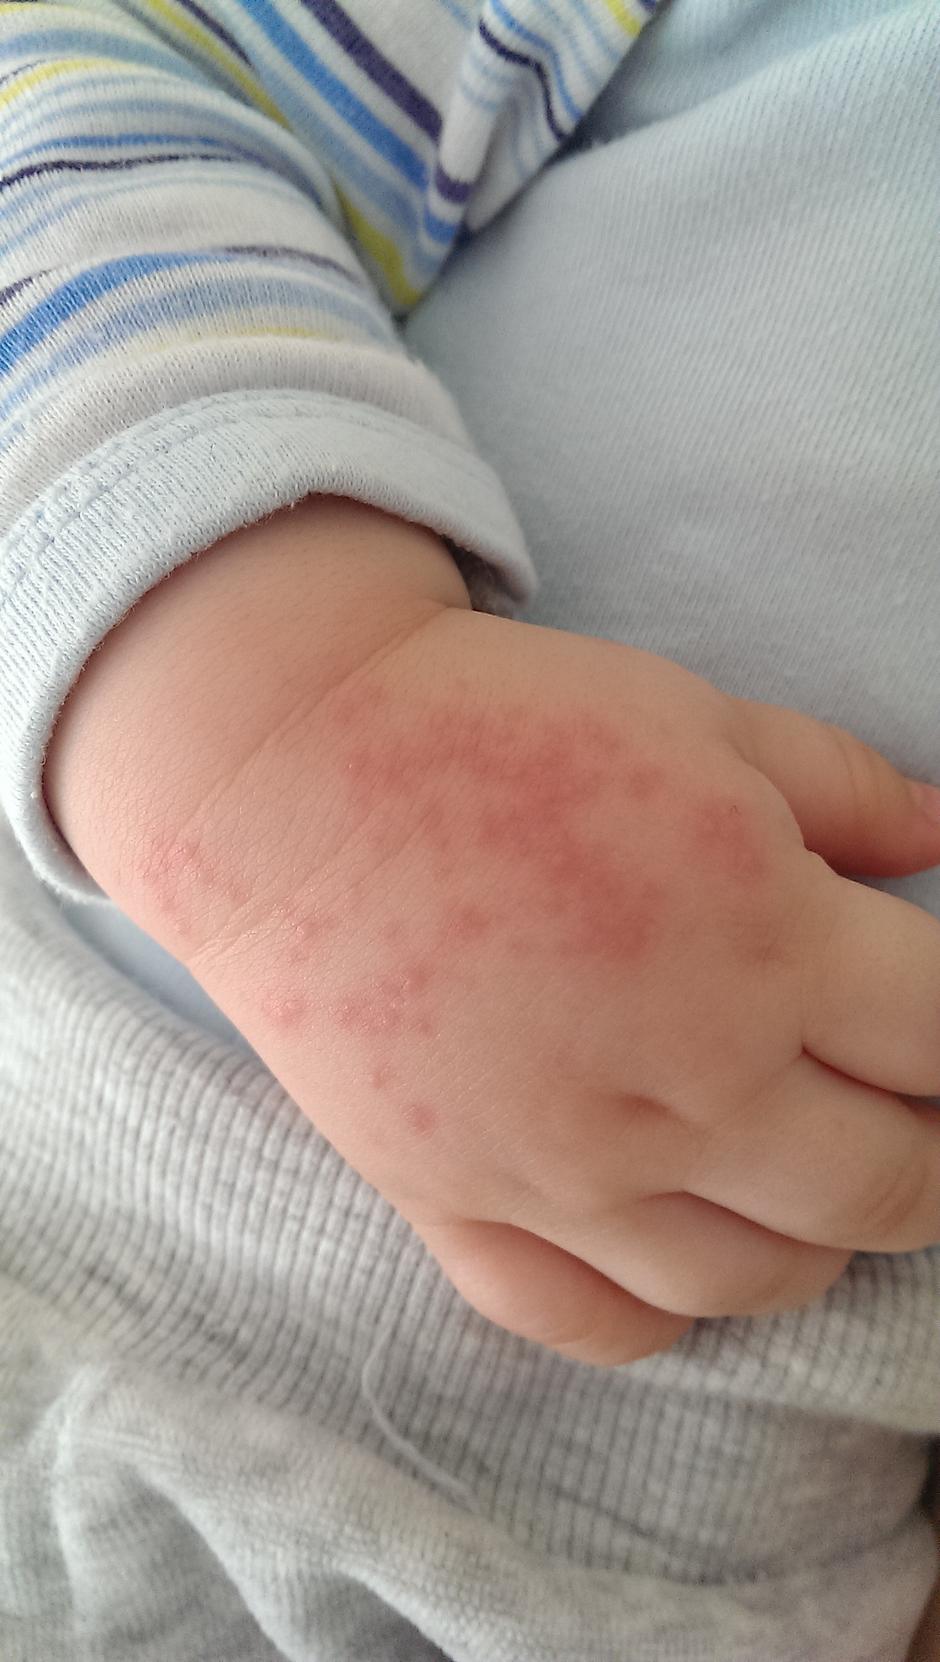 osip beba dijete dermatitis virus | Author: Shutterstock